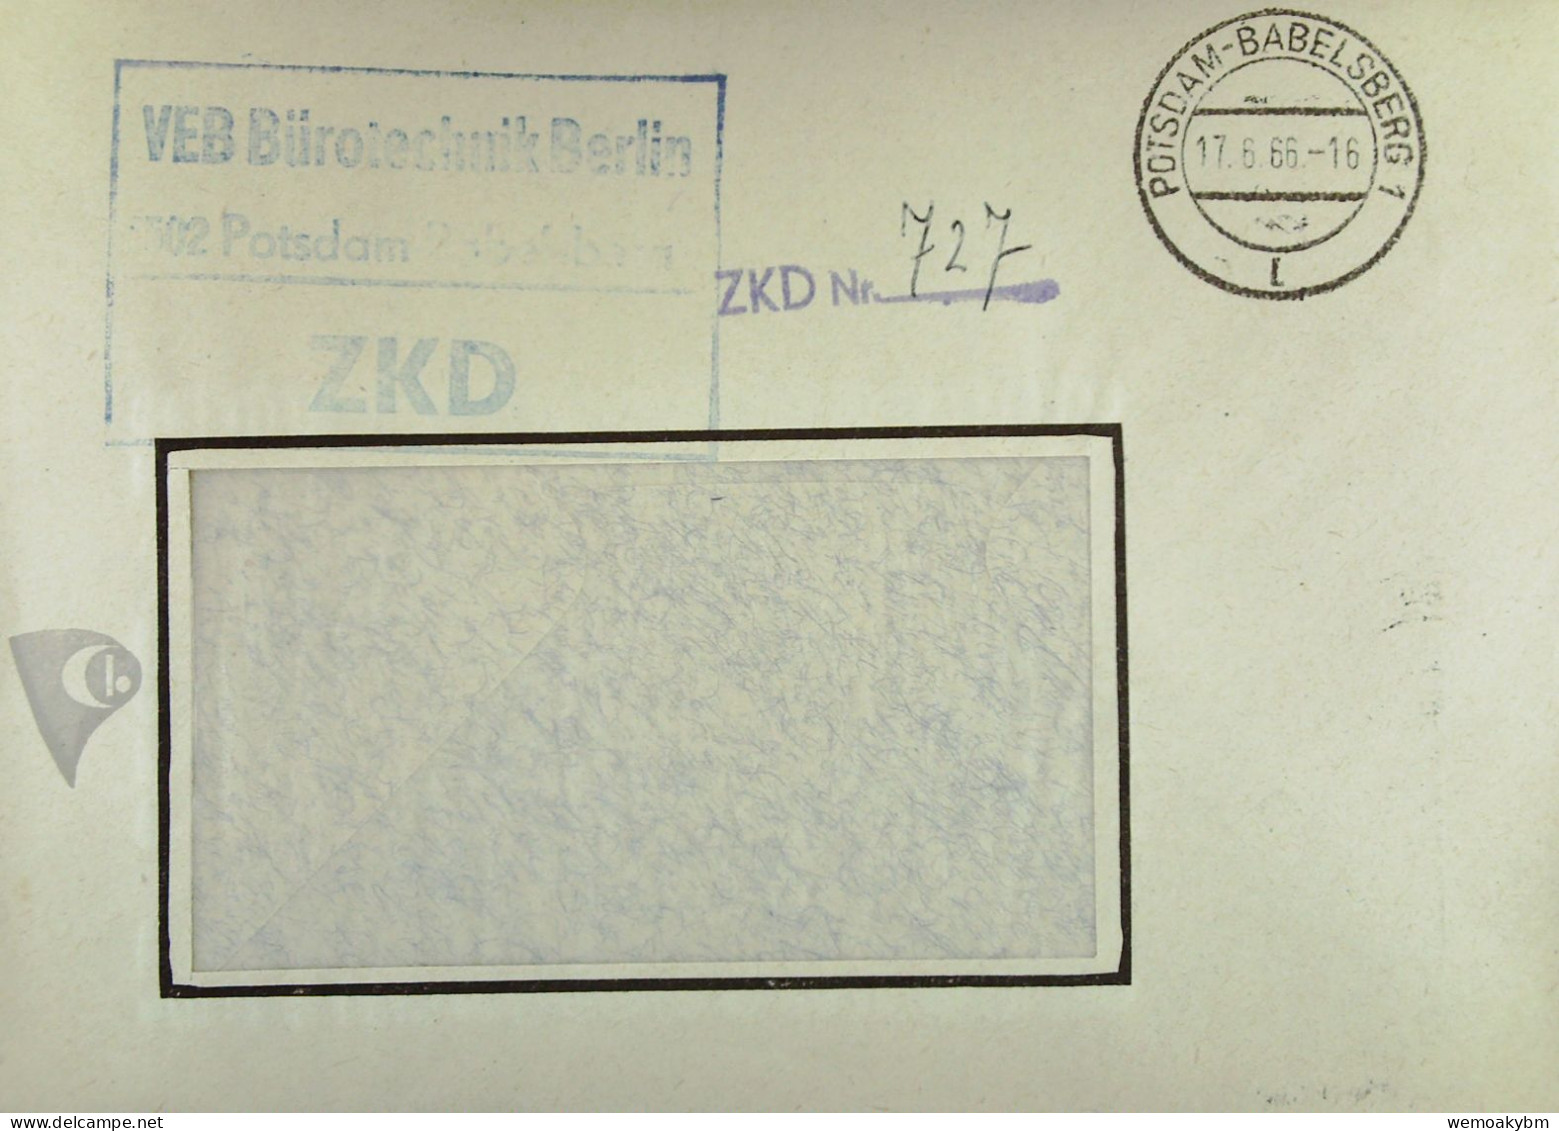 DDR-ZKD-Brief Mit Kastenstempel "VEB Bürotechnik Berlin 1502 Potsdam-Babelsberg" V. 17.6.66  ZKD-Nr. 727 Fensterumschlag - Lettres & Documents